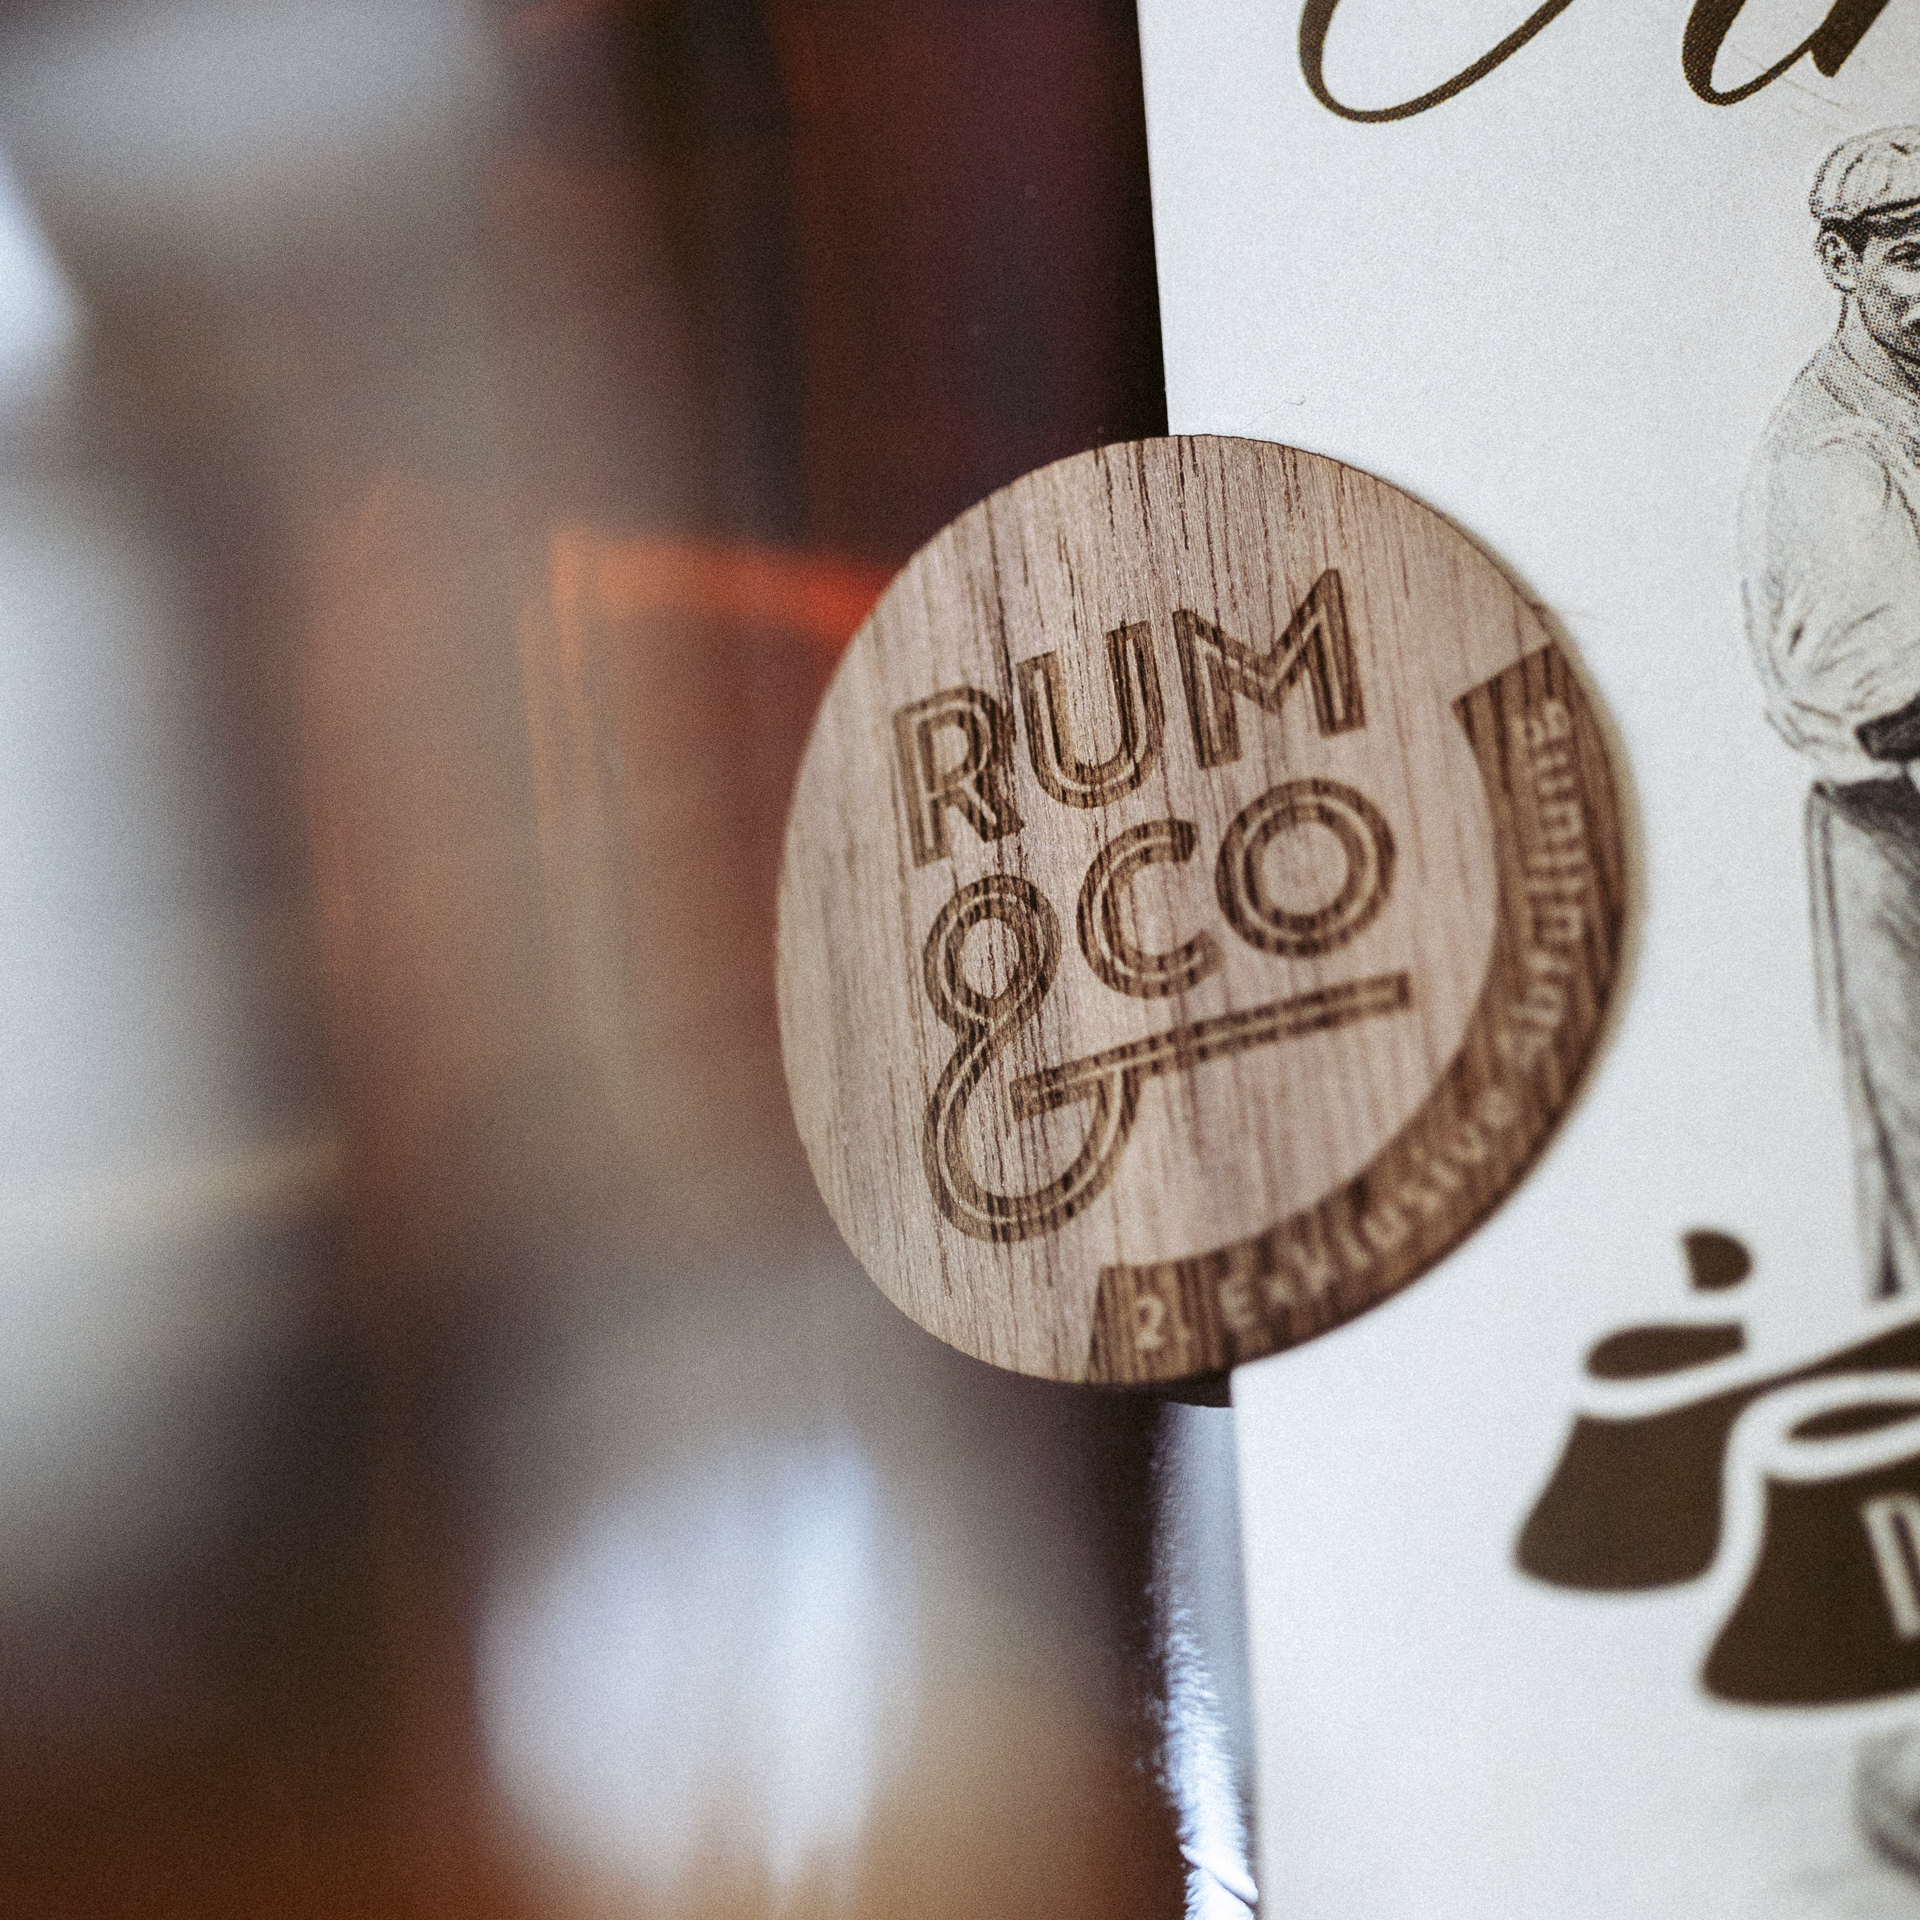 El Ron del Artesano 10 Jahre Amarone Cask 56,7% 0,7l - 2. Exklusive Rum & Co Abfüllung